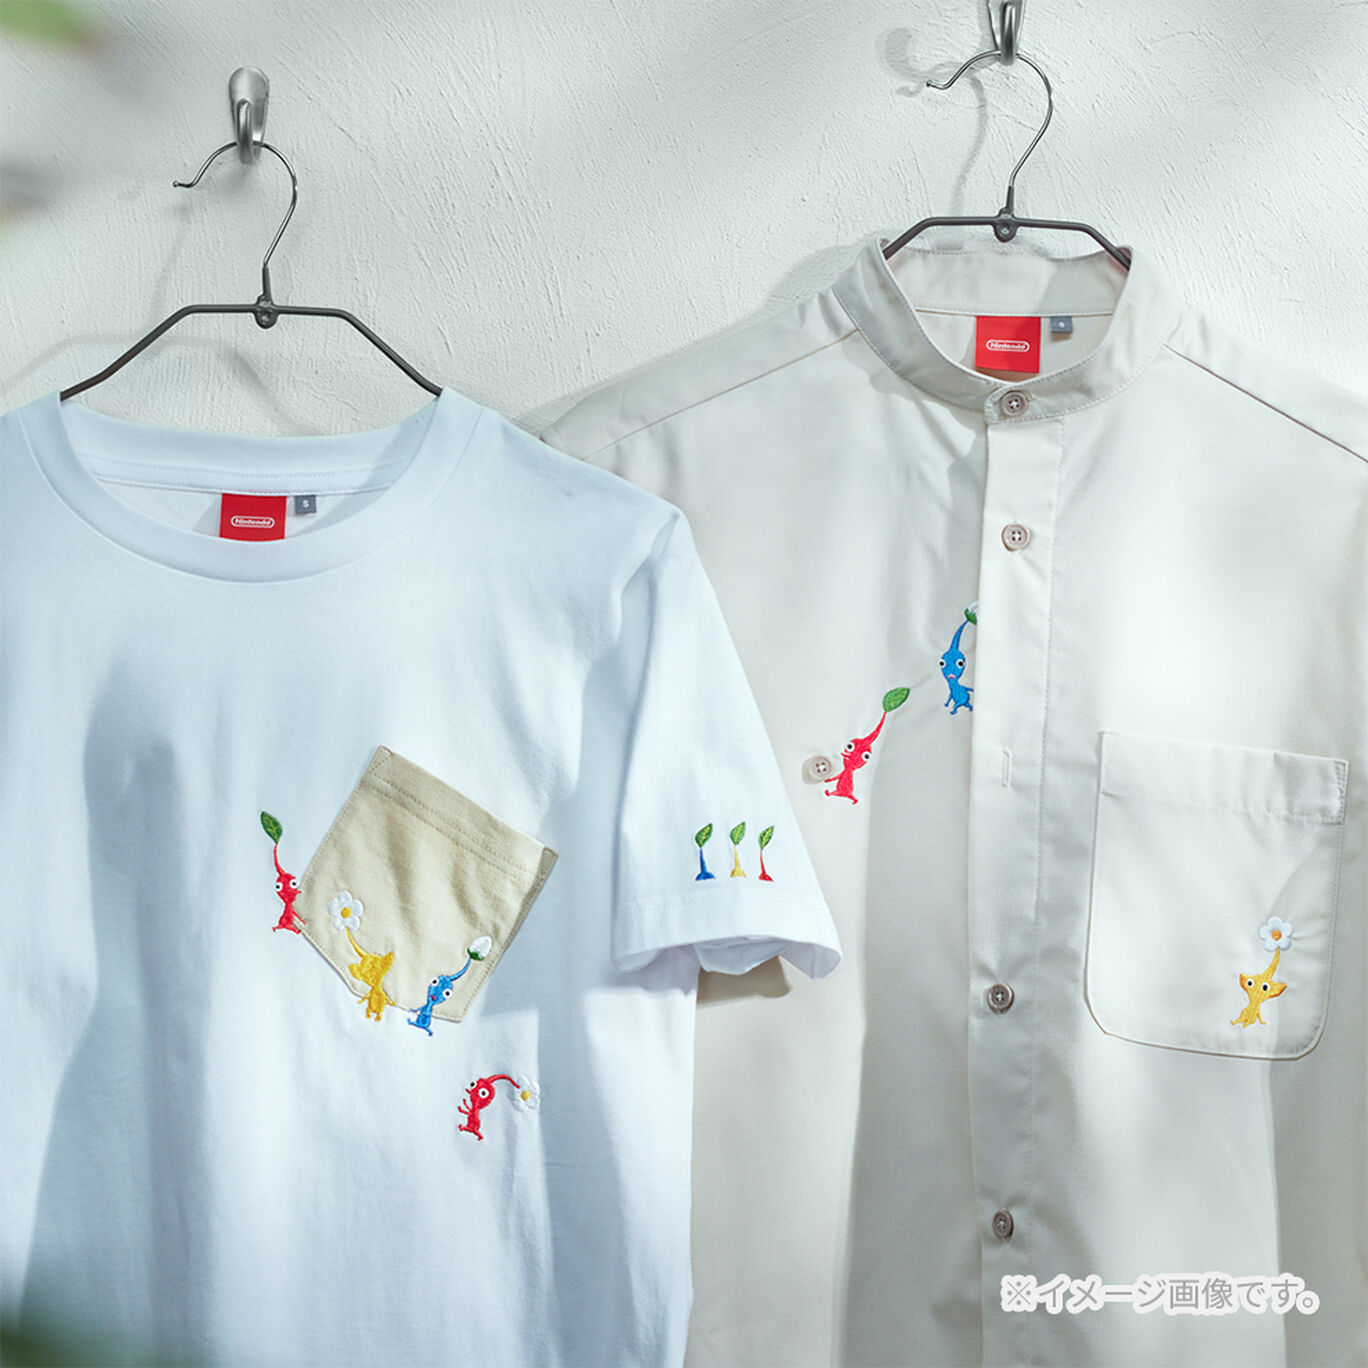 Tシャツ お宝回収 XL PIKMIN【Nintendo TOKYO取り扱い商品】